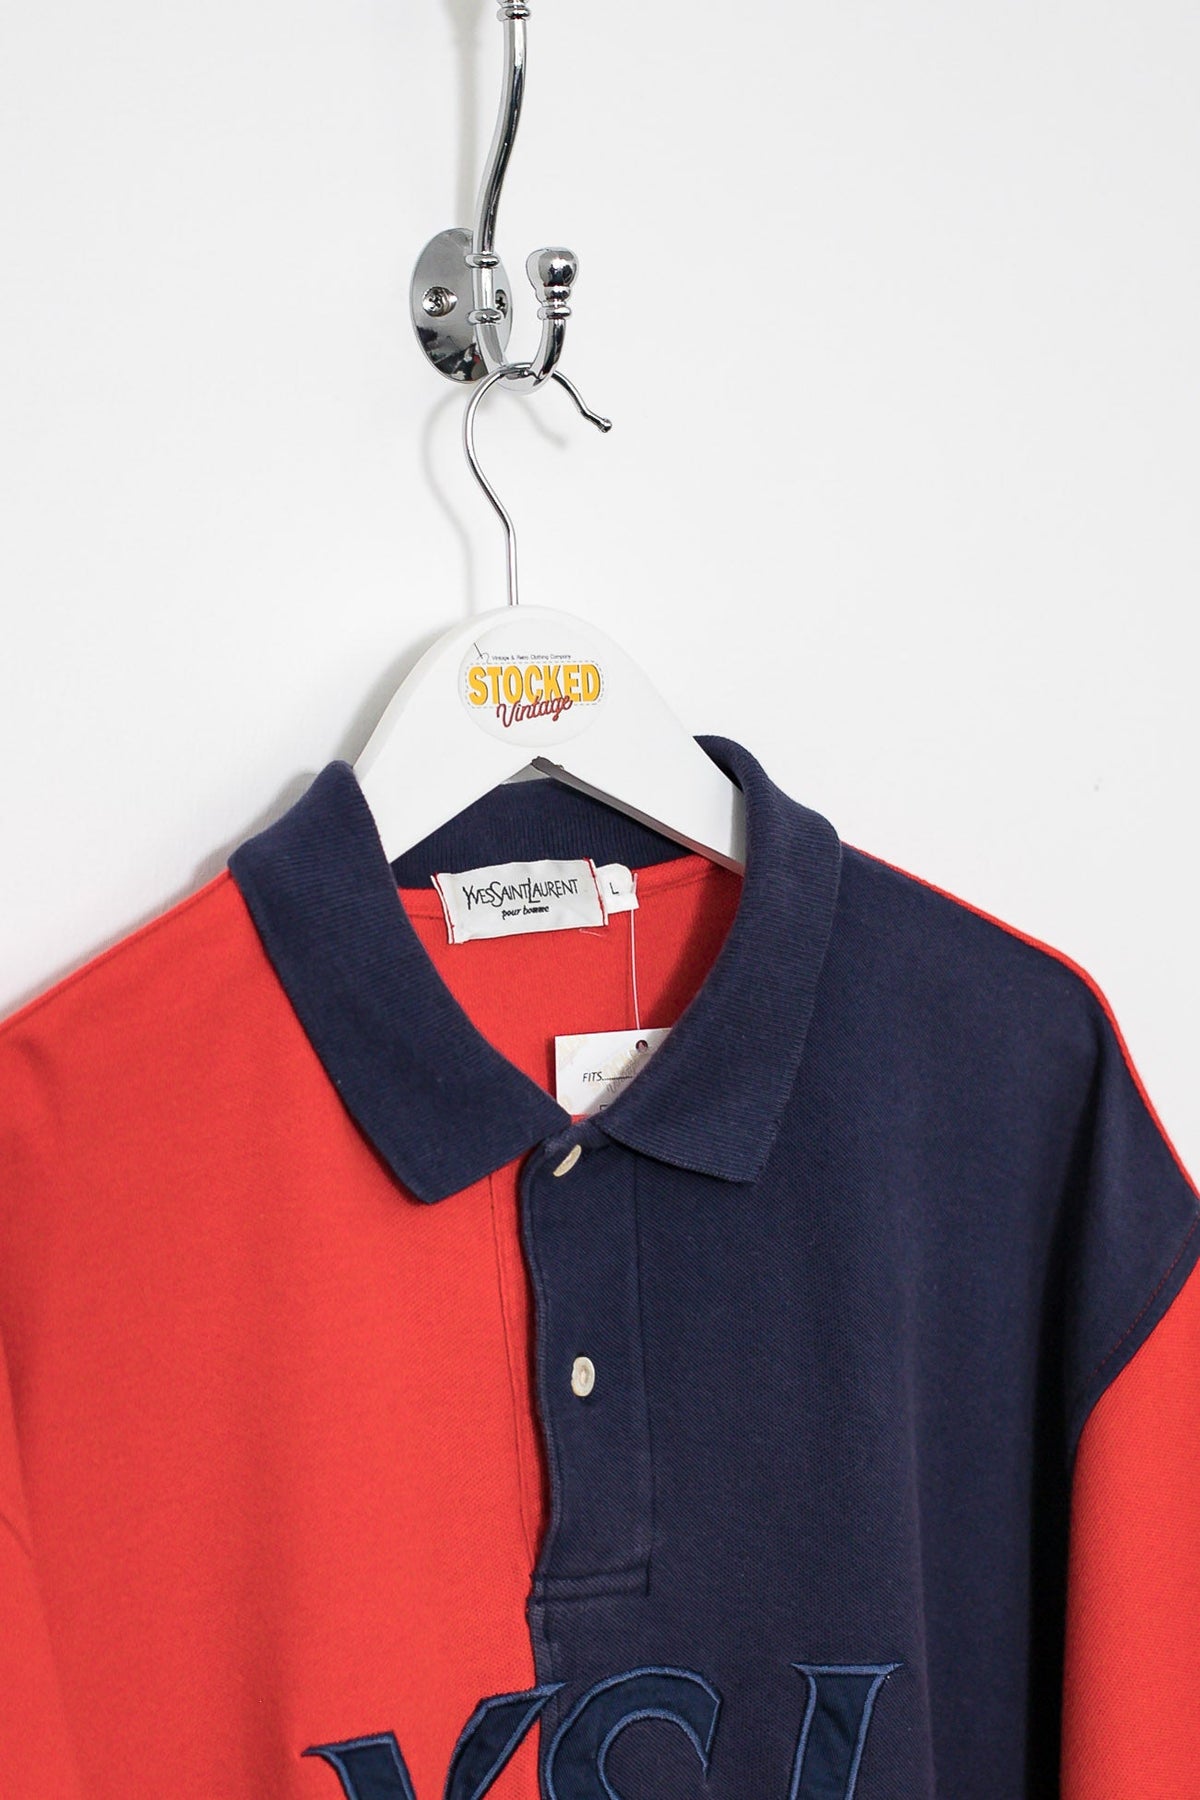 90s YSL Polo Shirt (L)